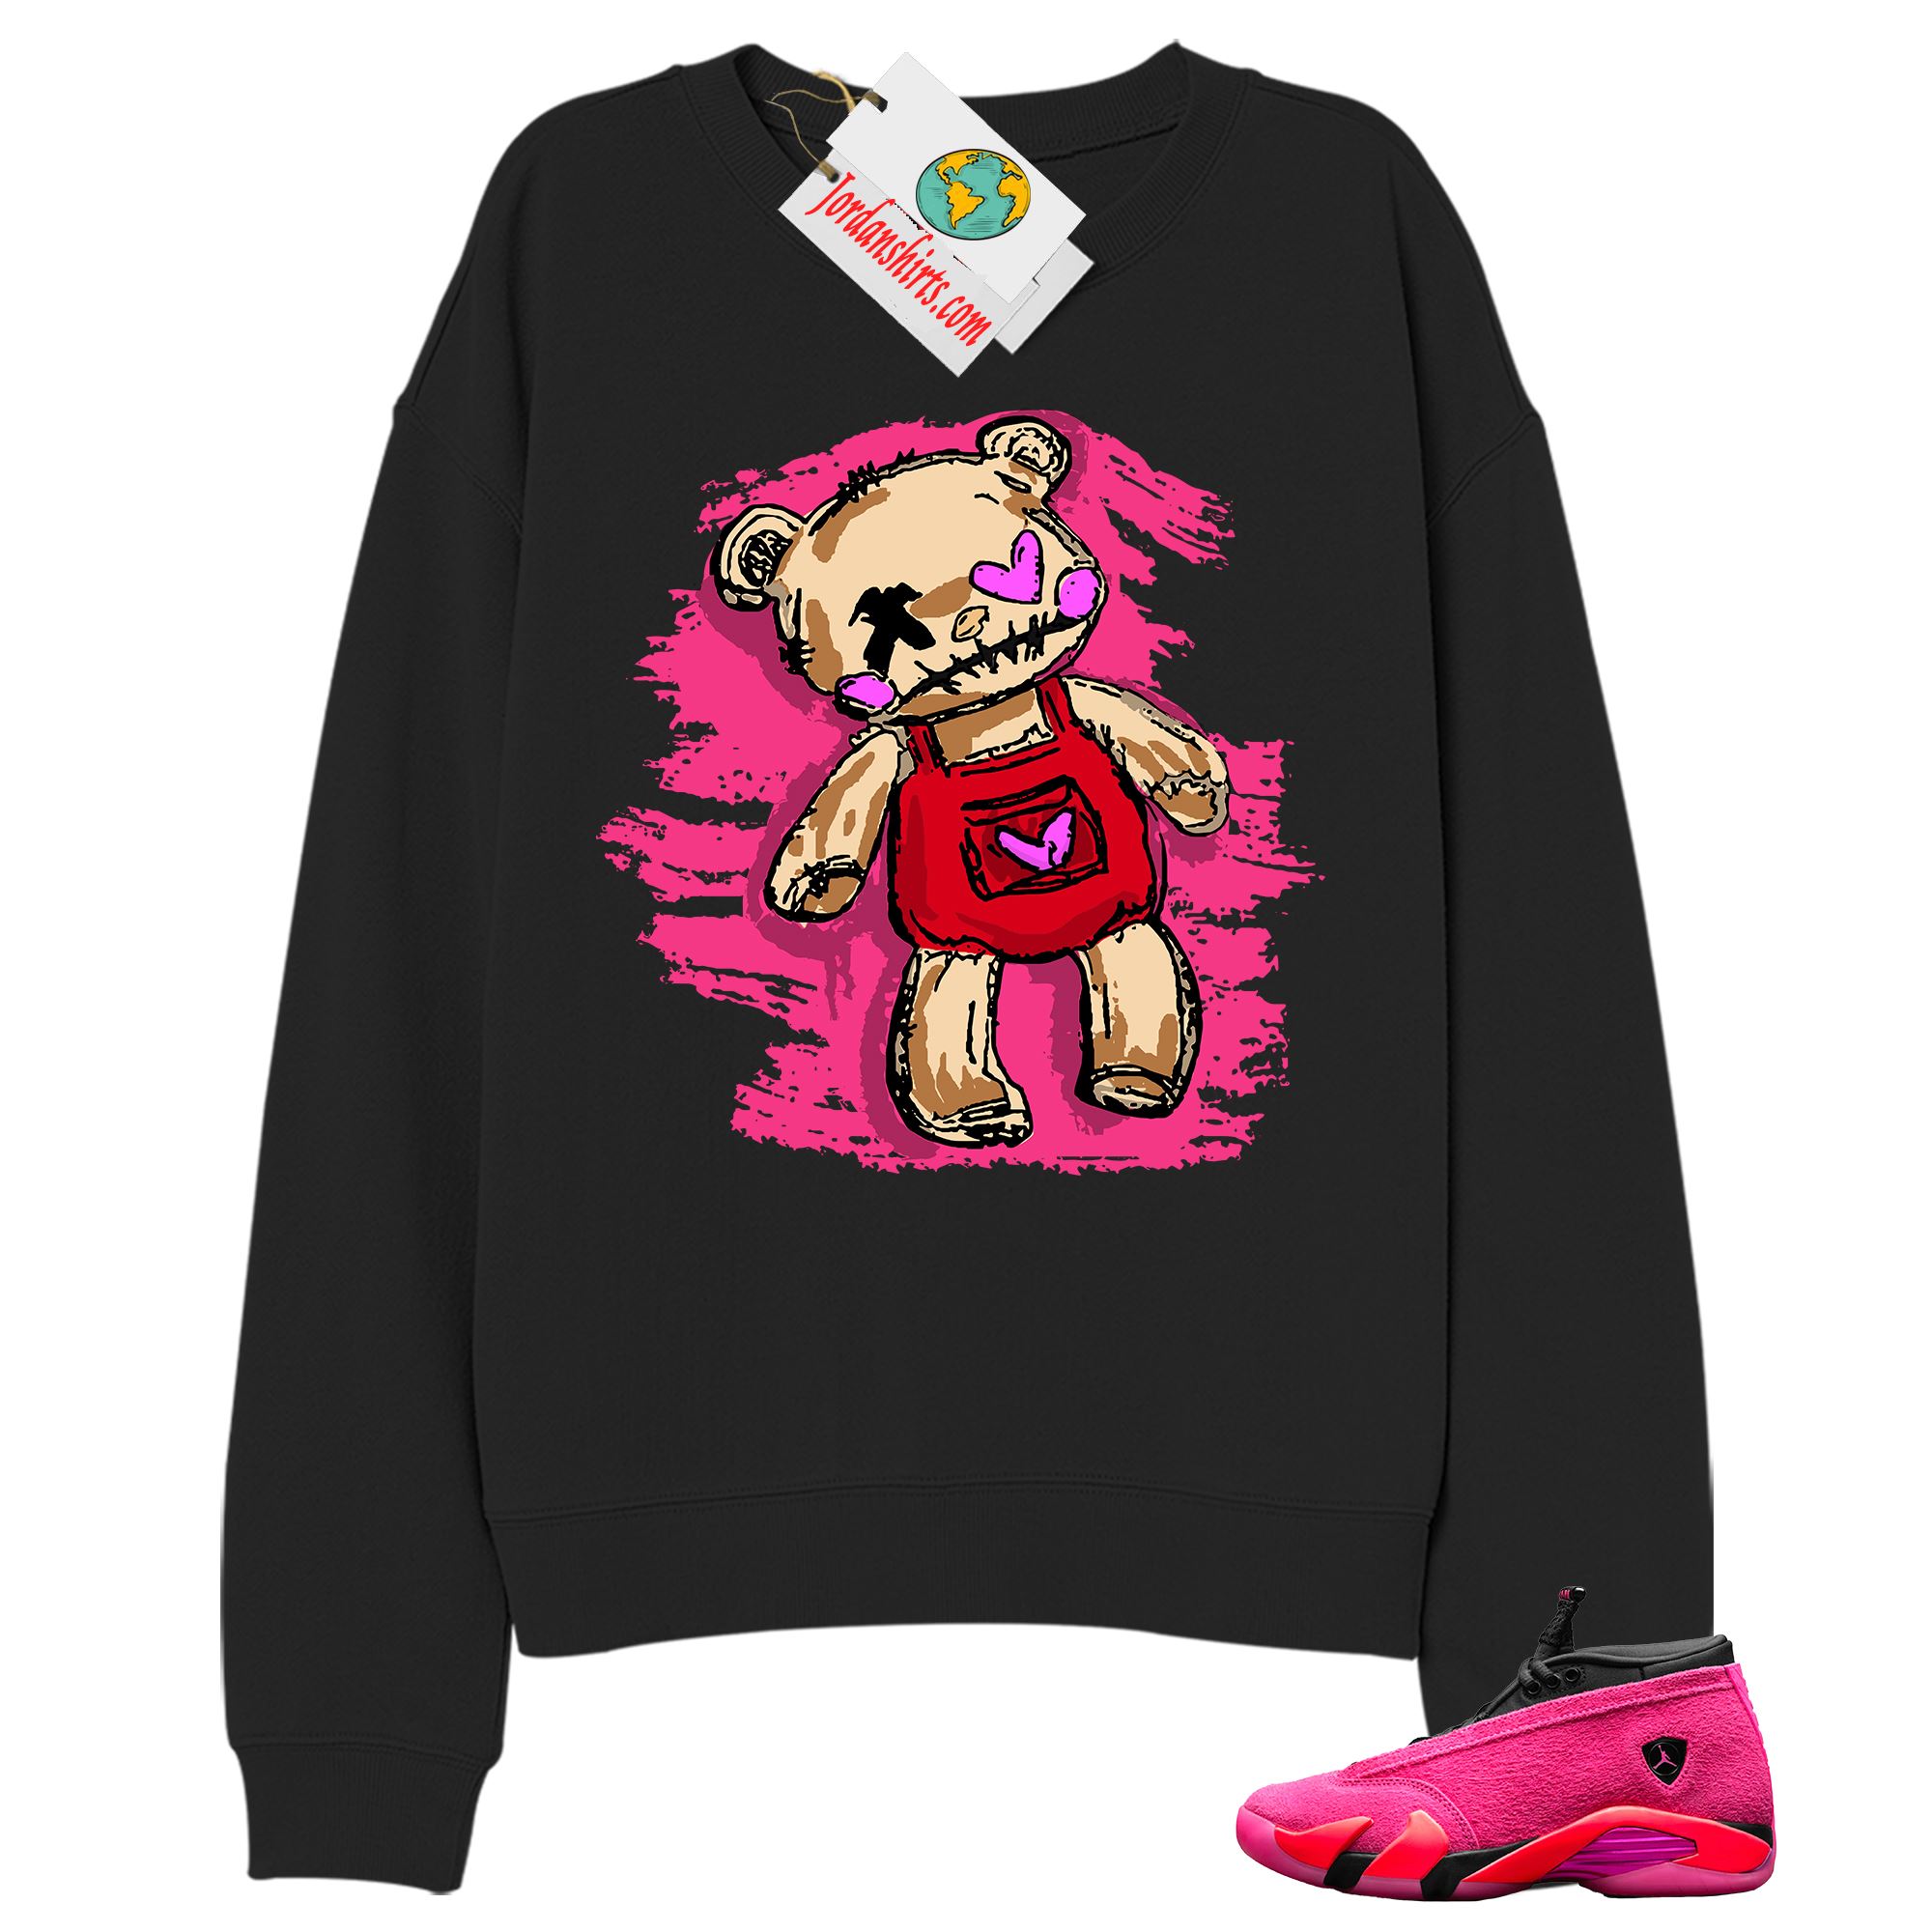 Jordan 14 Sweatshirt, Teddy Bear Broken Heart Black Sweatshirt Air Jordan 14 Wmns Shocking Pink 14s Full Size Up To 5xl